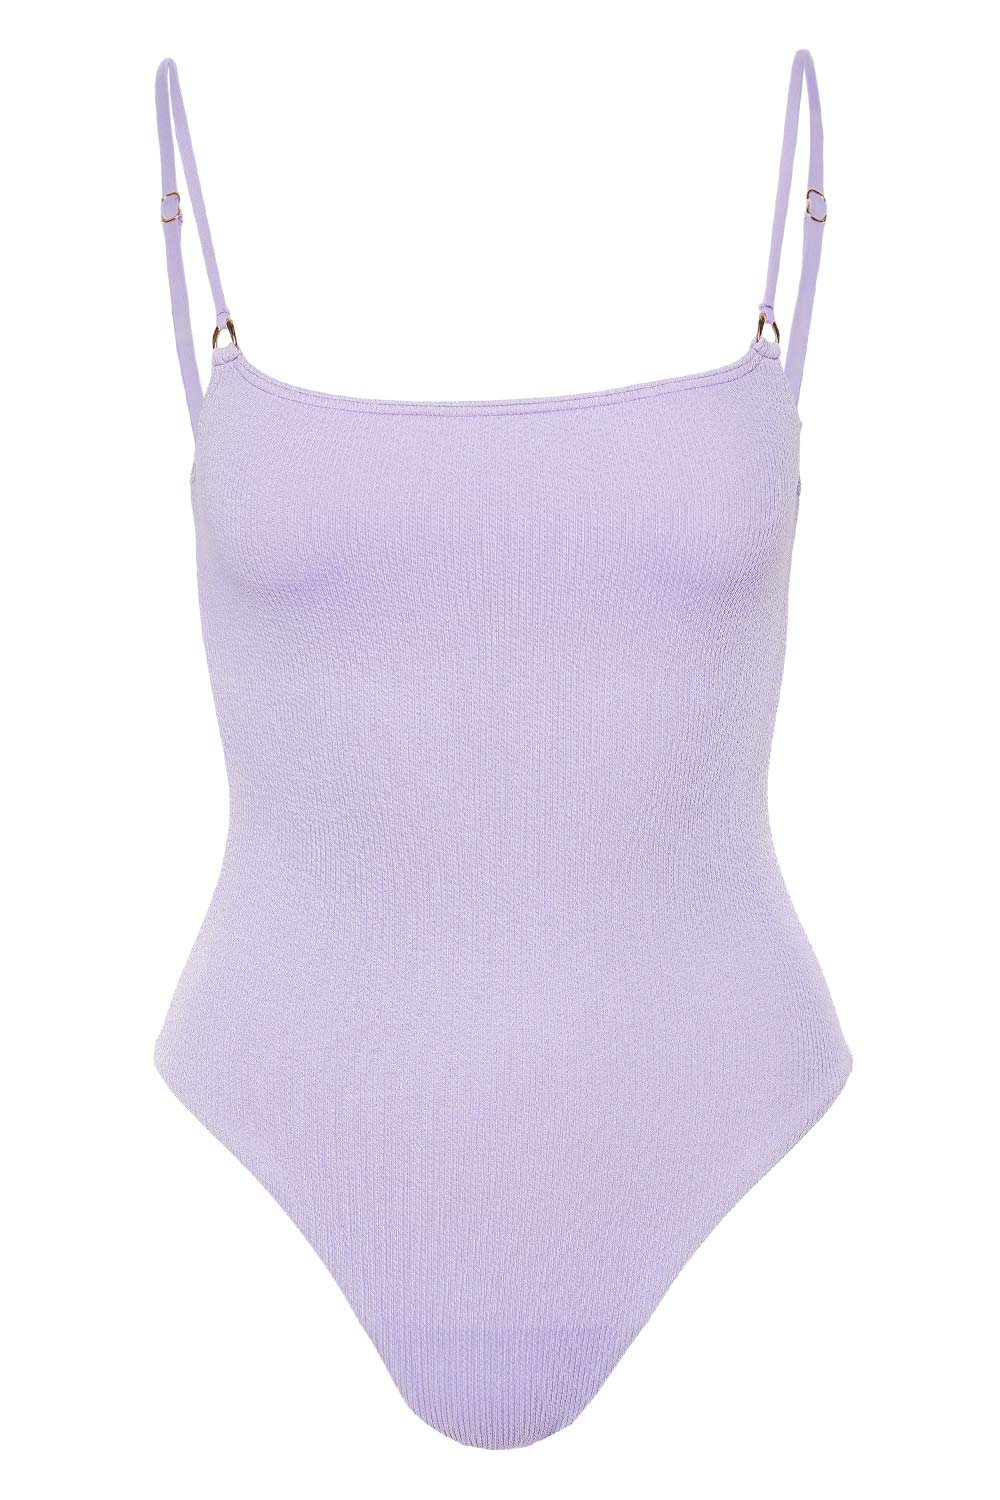 Melissa Odabash Palma Lavender Rib Knit One Piece Swimsuit